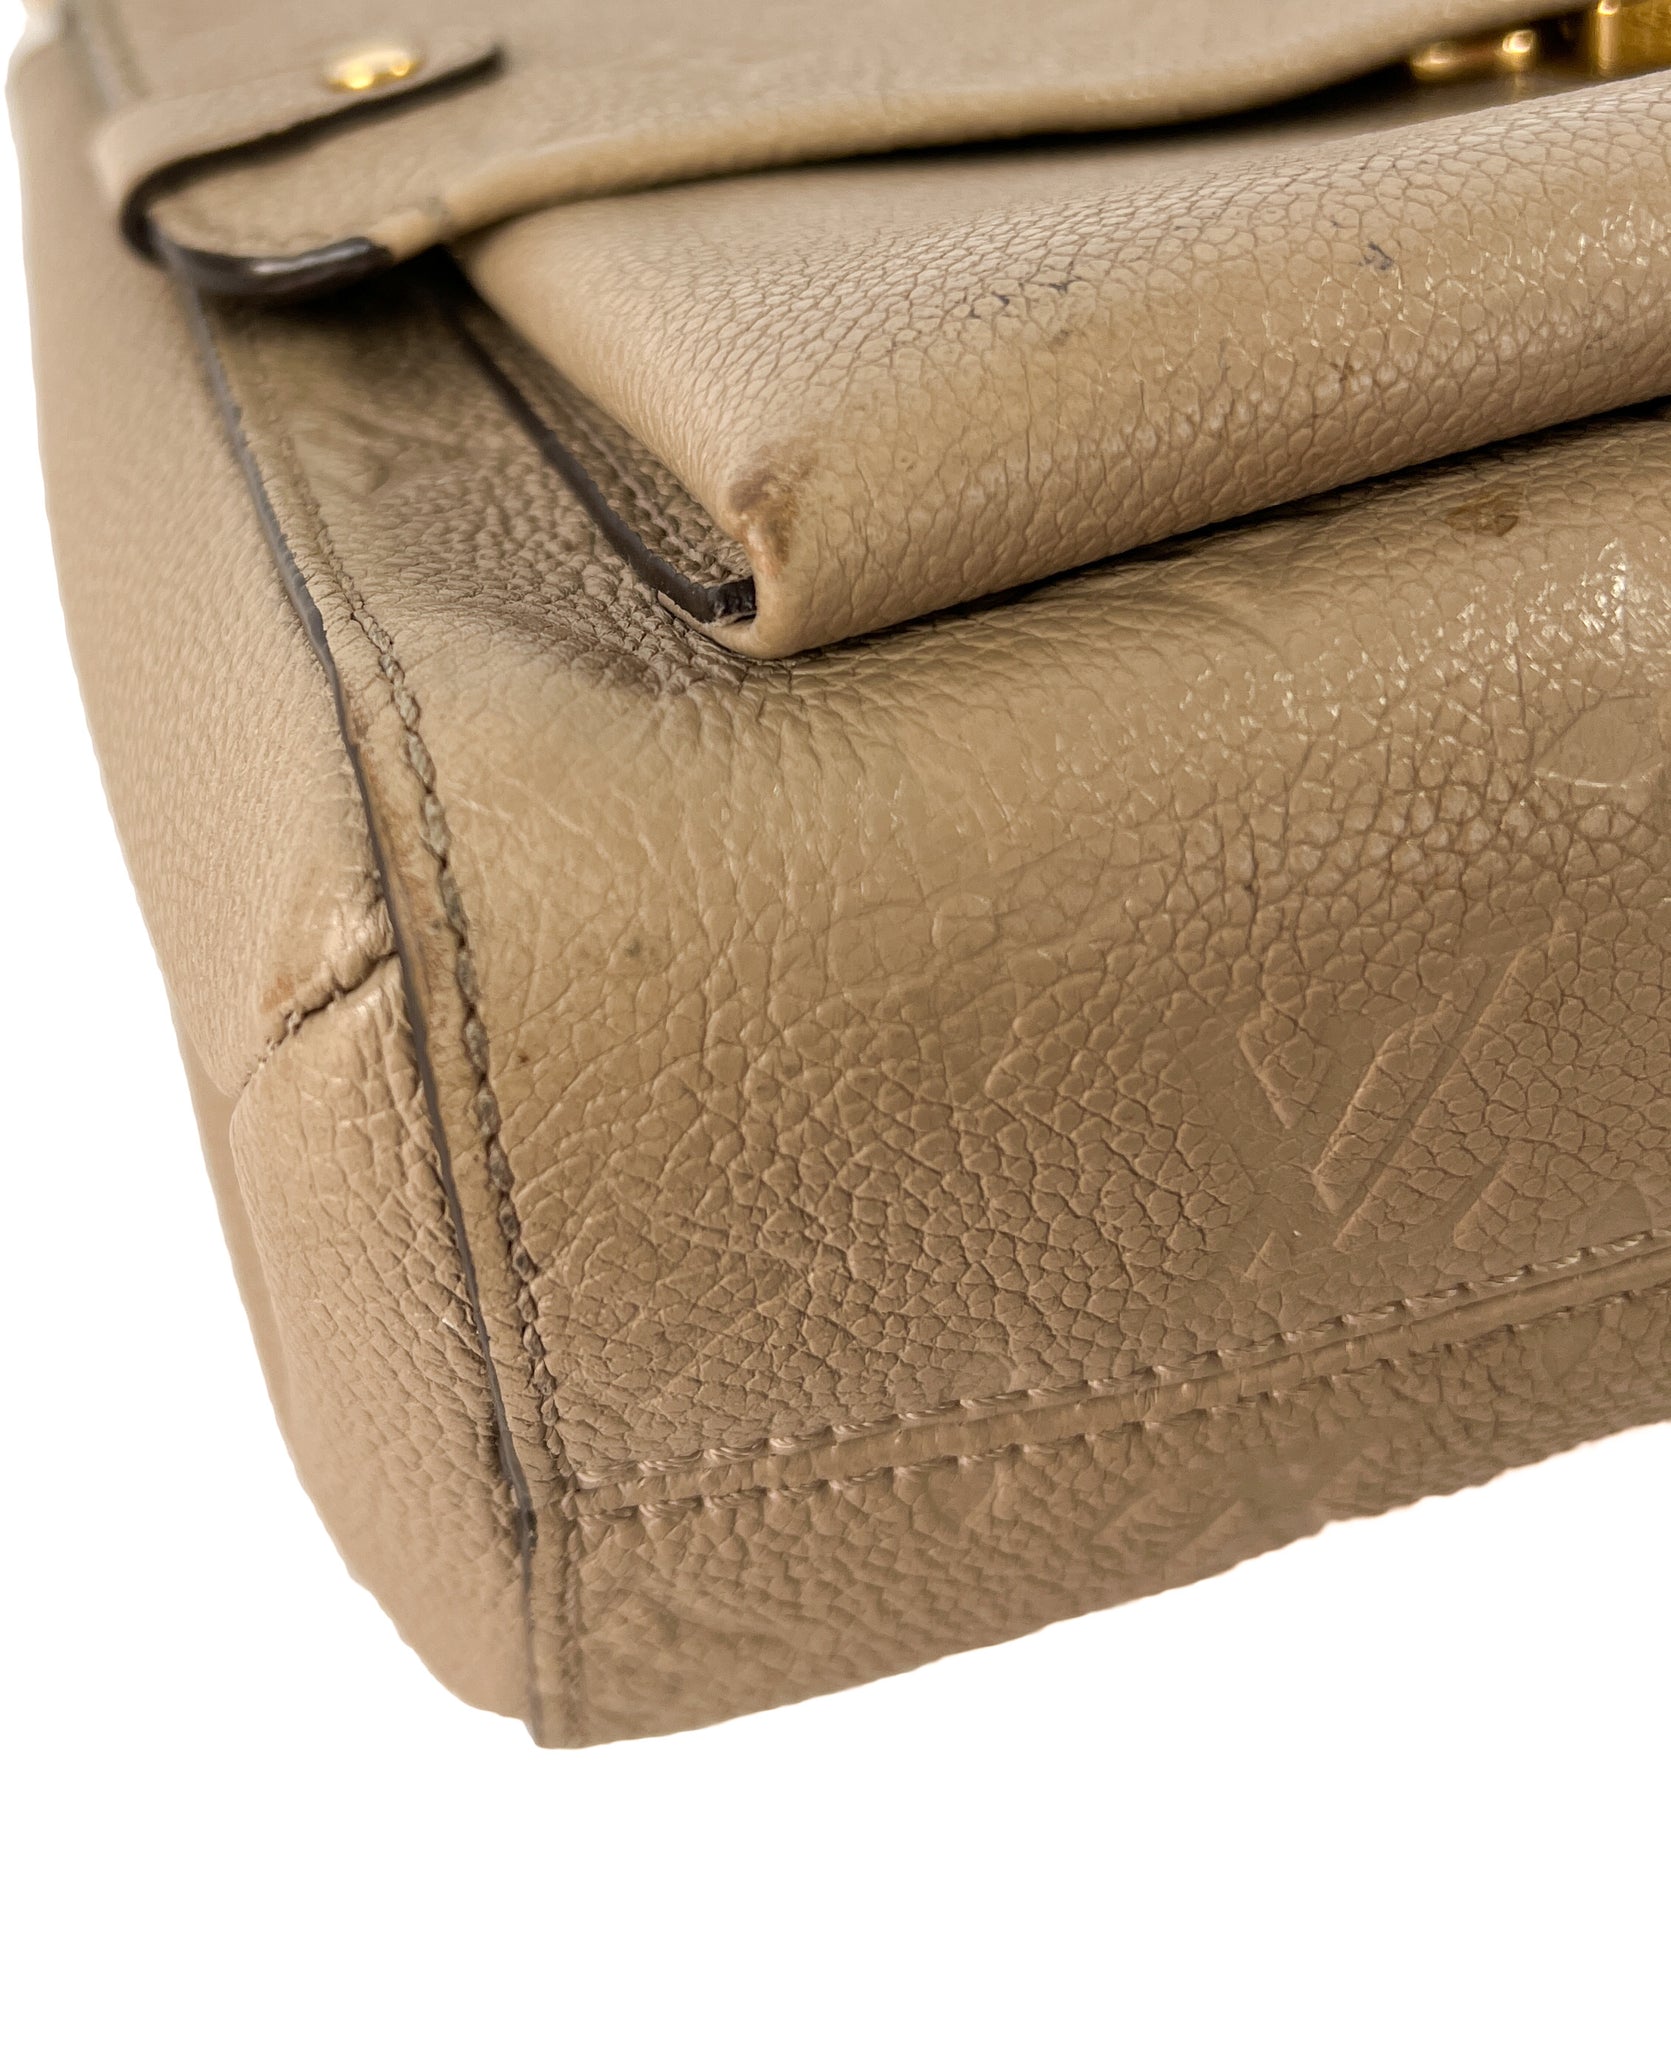 Louis Vuitton Vavin PM, Turtledove Grey Empreinte Leather